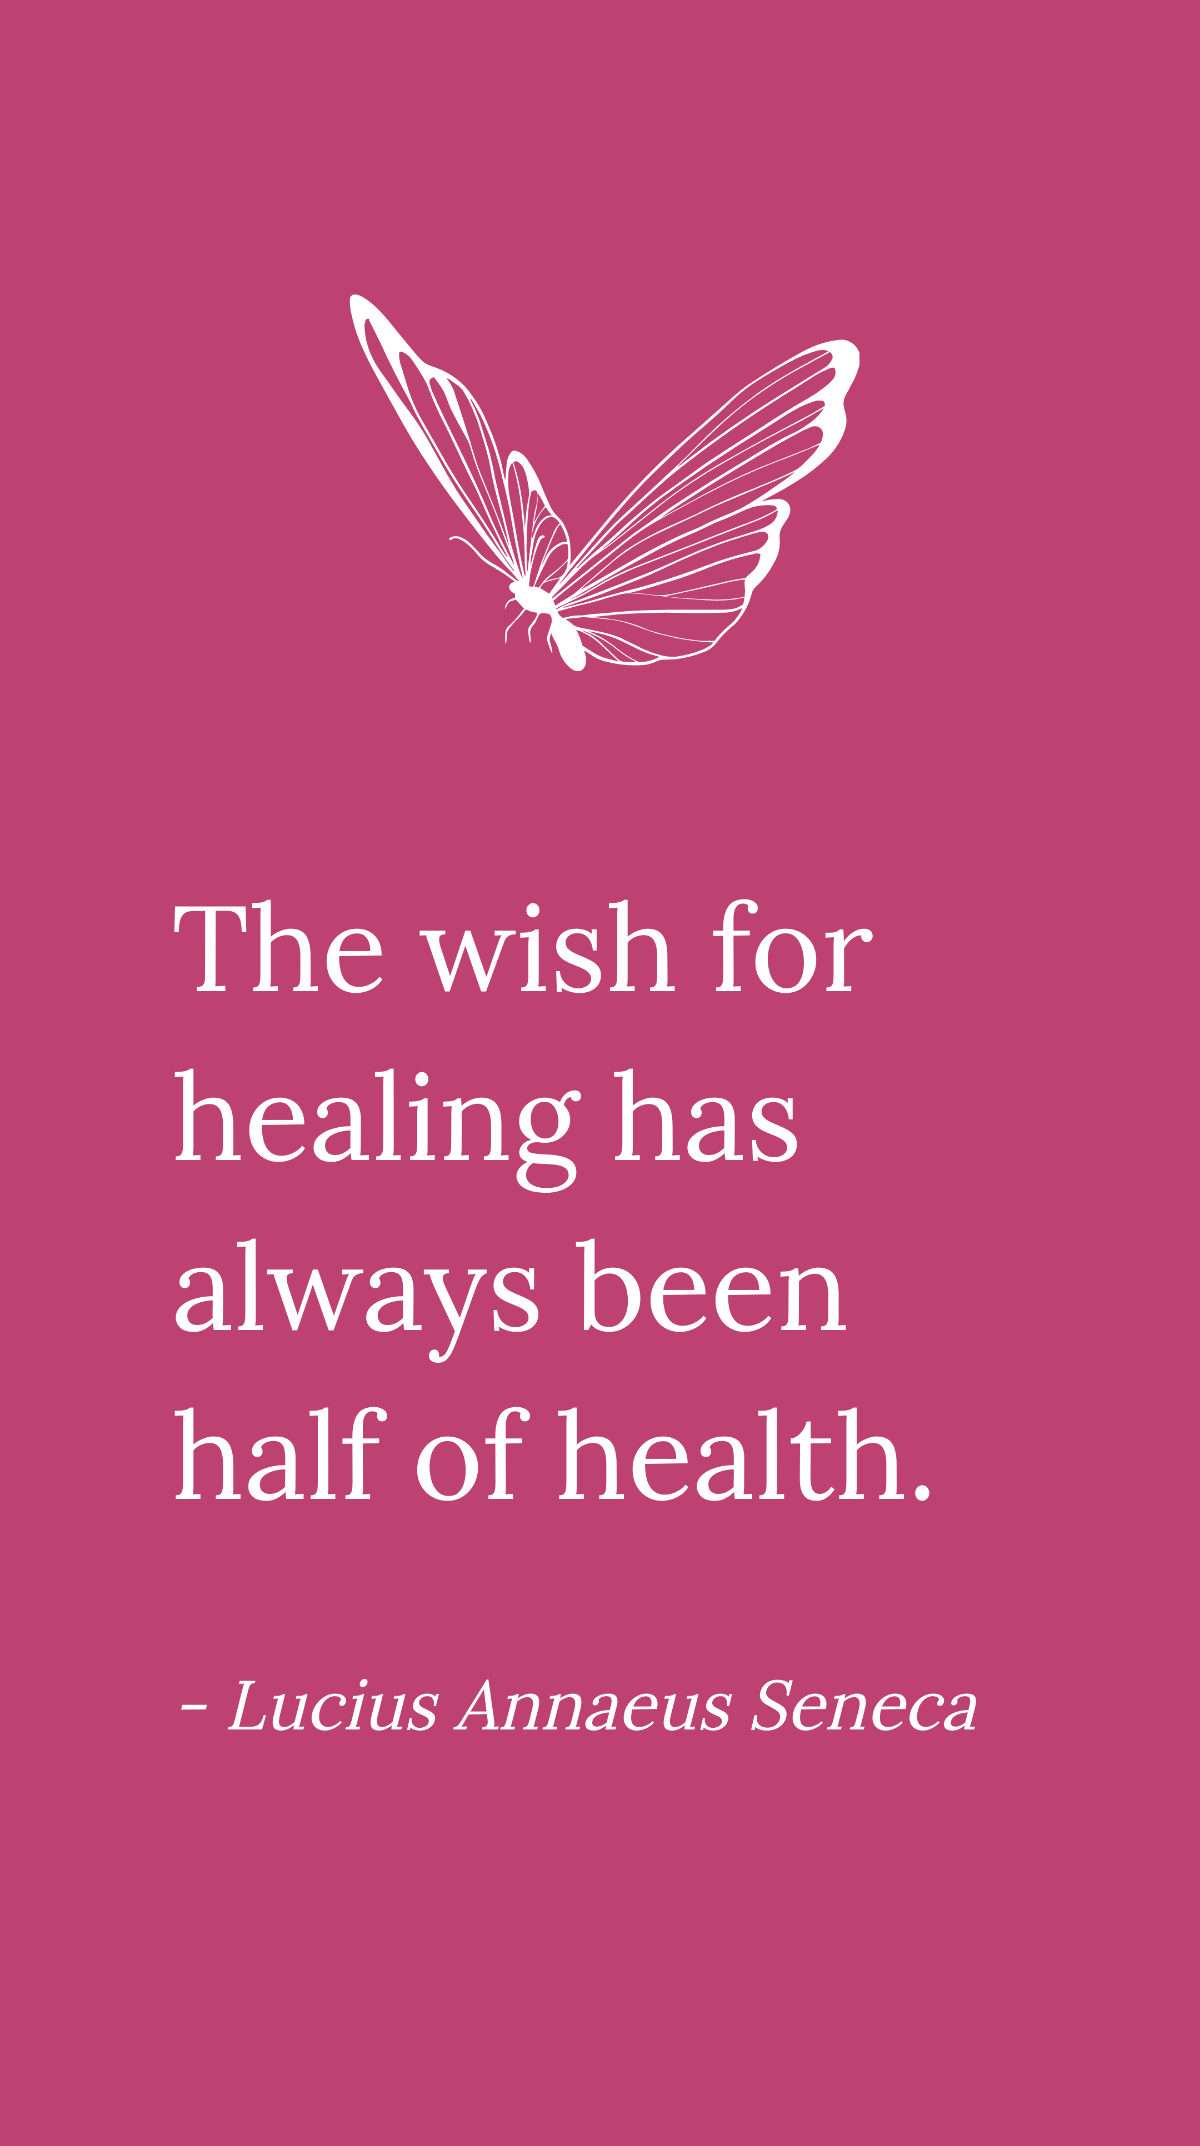 Lucius Annaeus Seneca - The wish for healing has always been half of health. Template